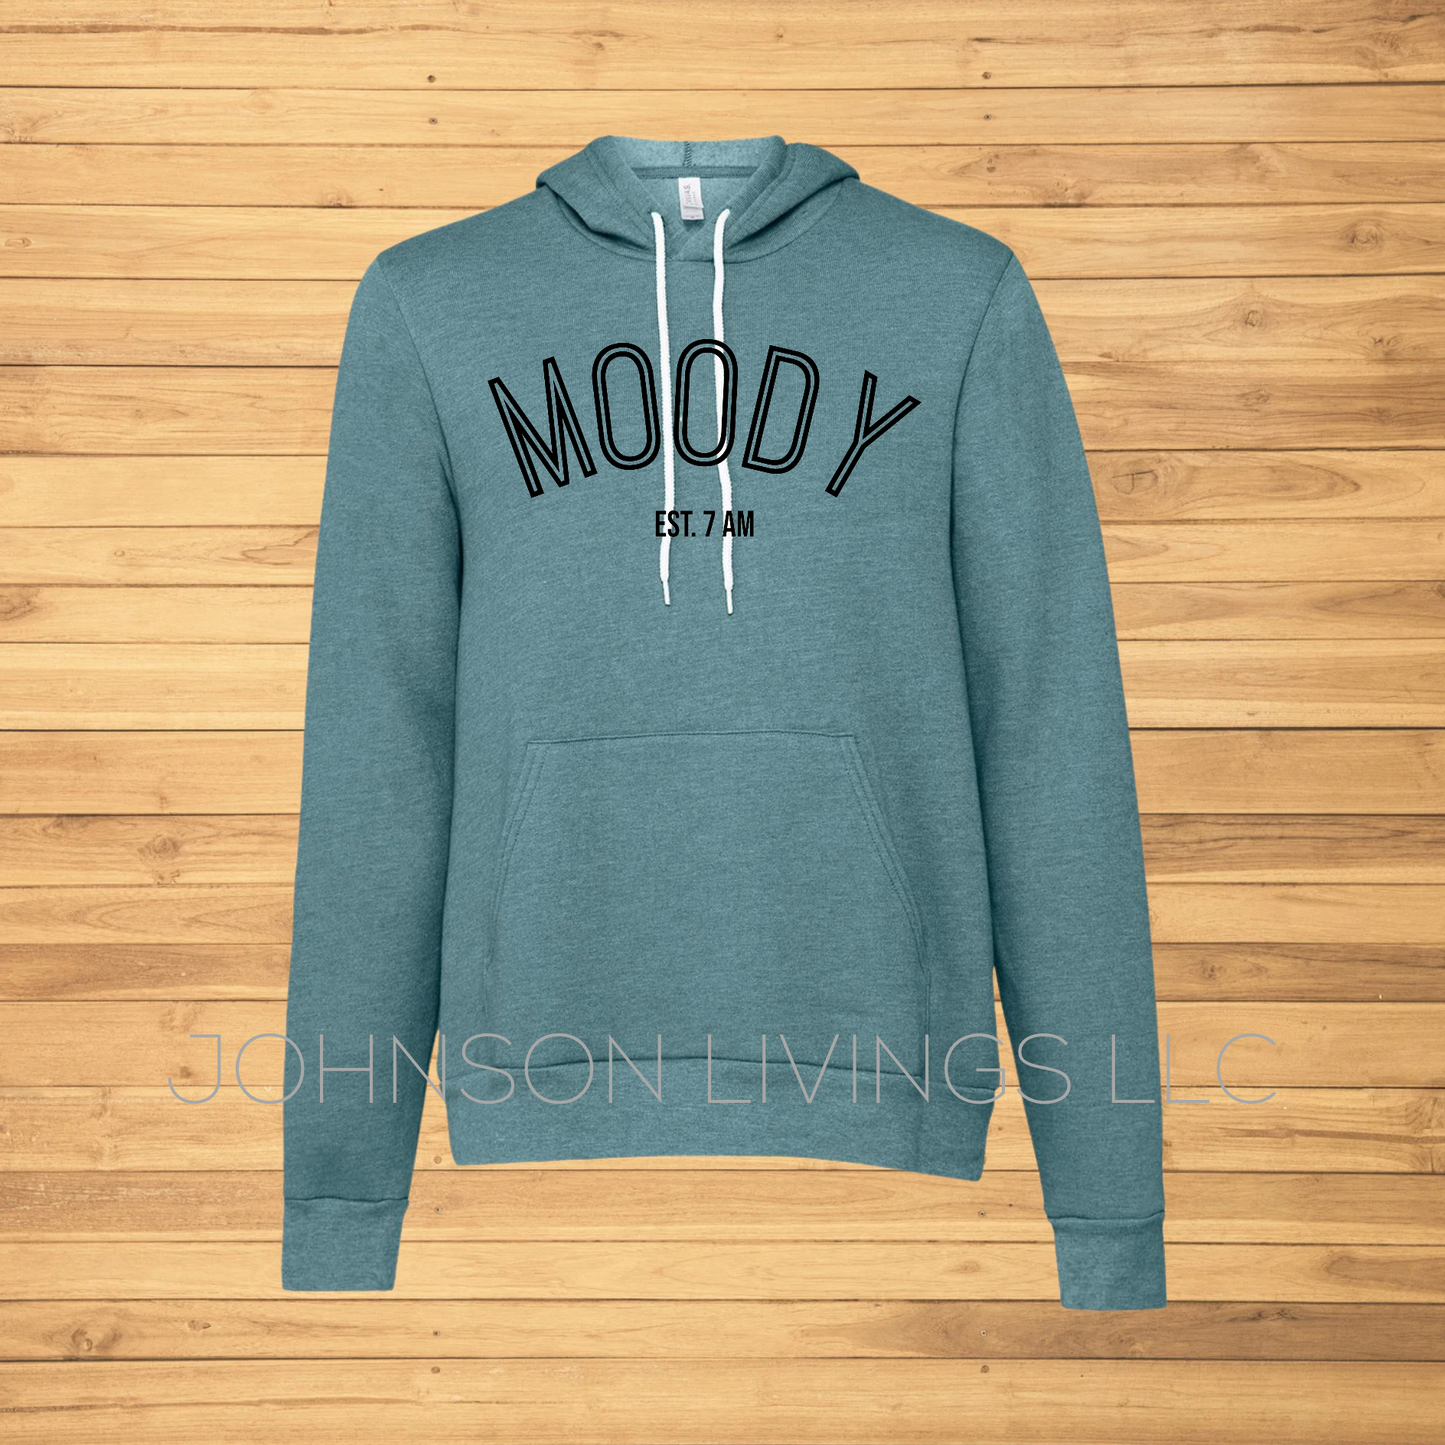 Moody Est 7 am Sweatshirt